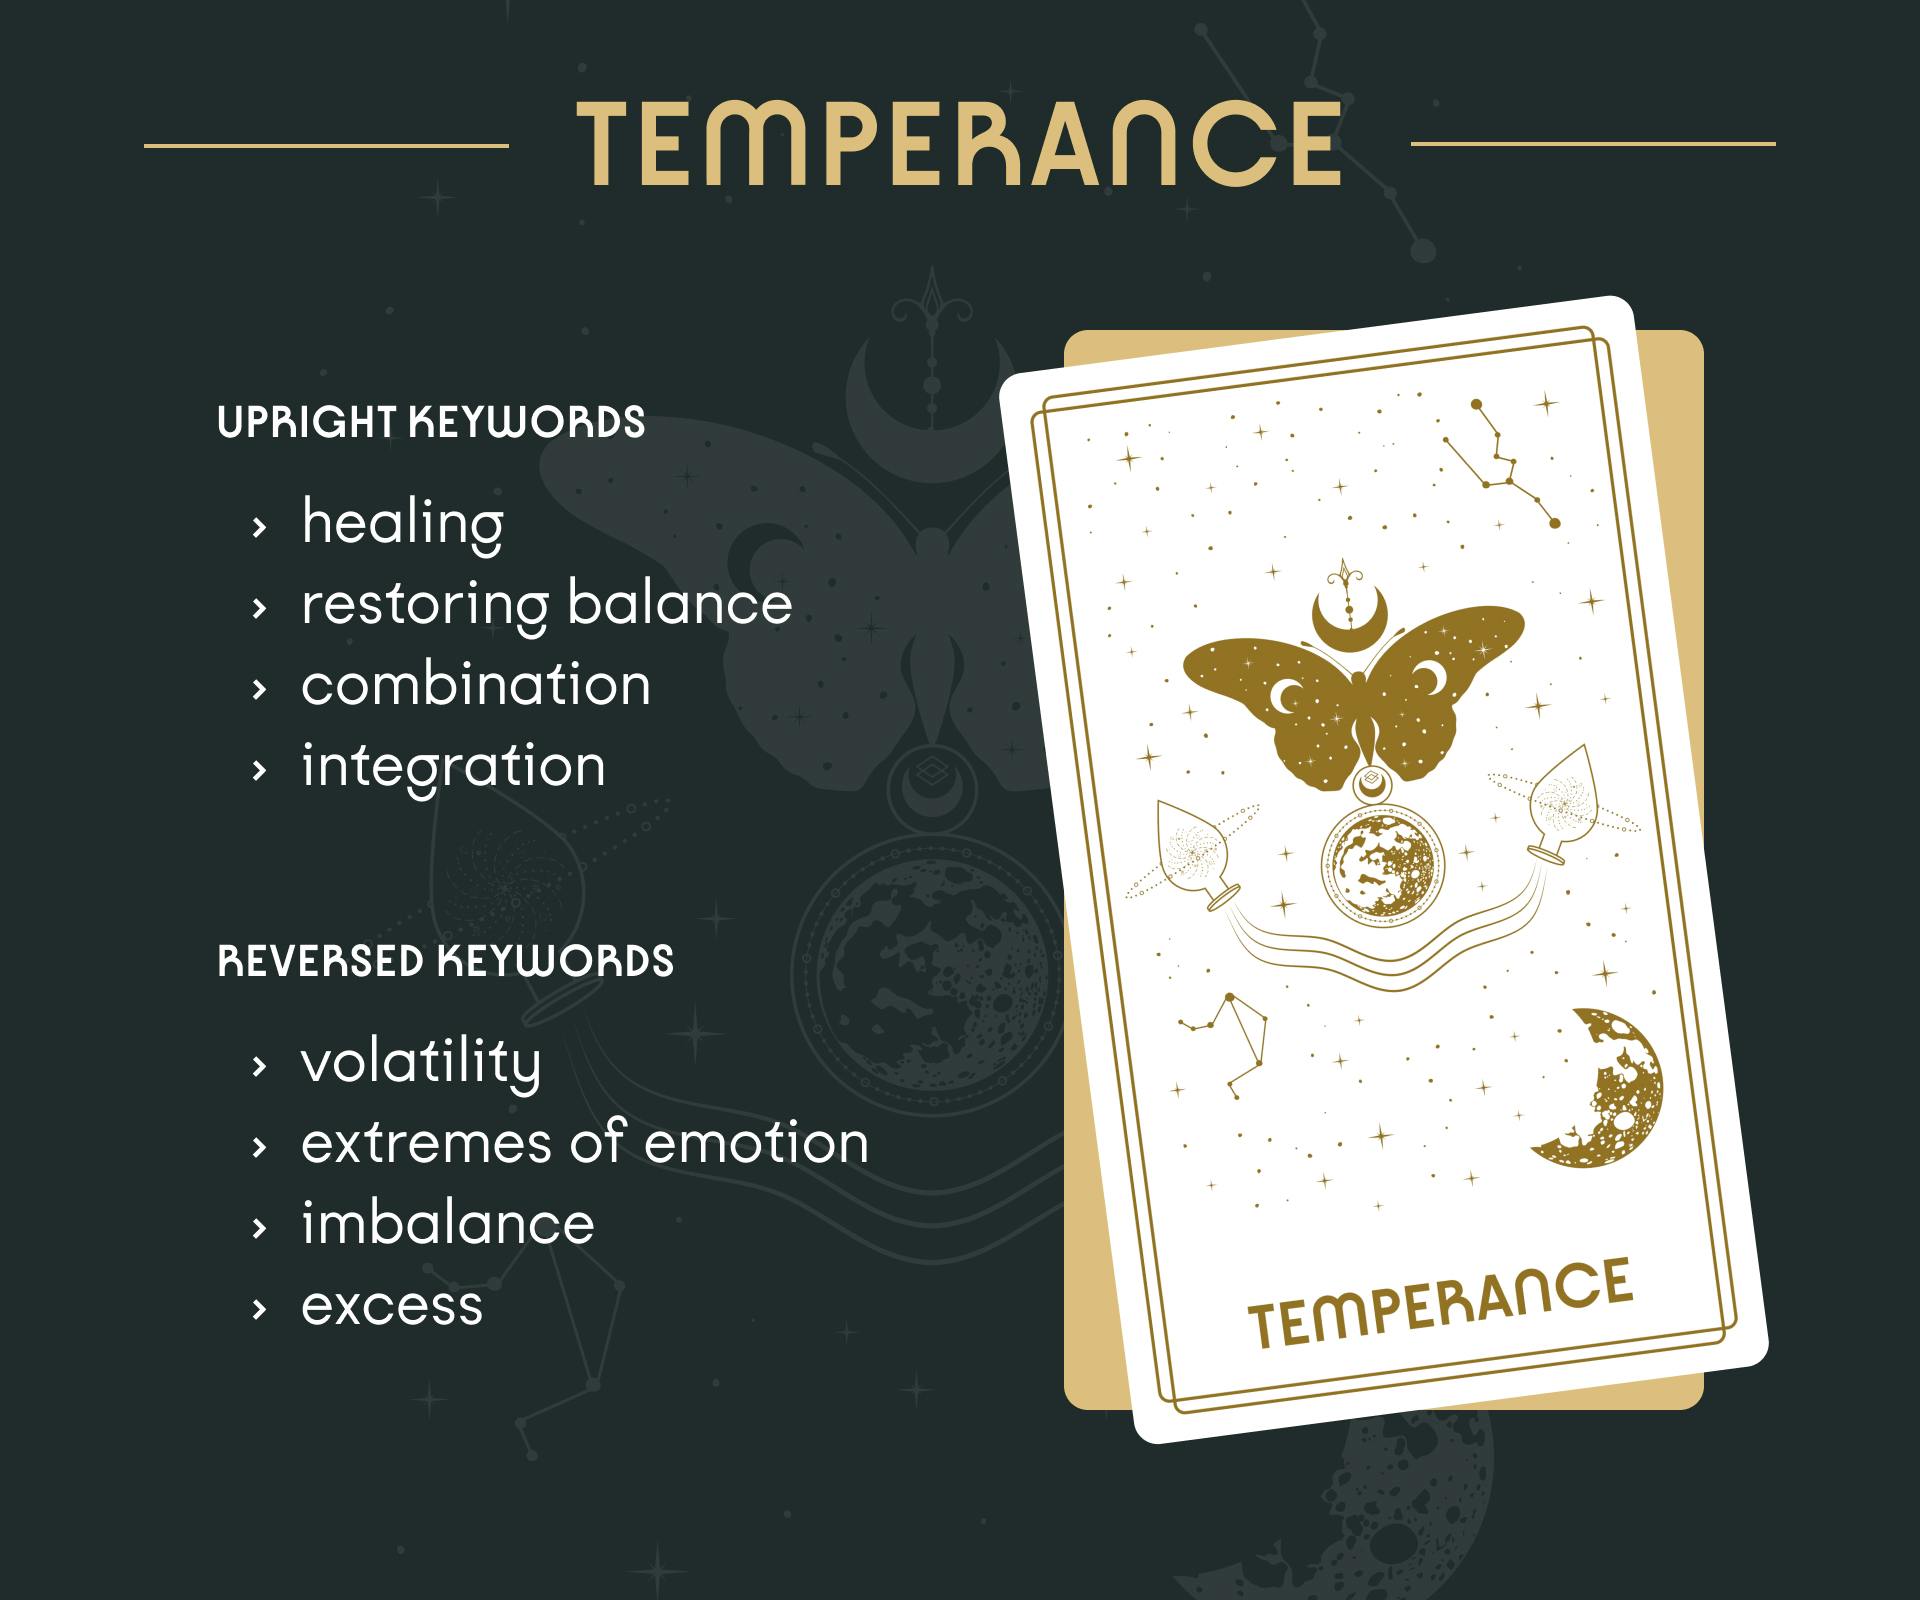 Temperance Tarot Card Upright and Reversed Keywords